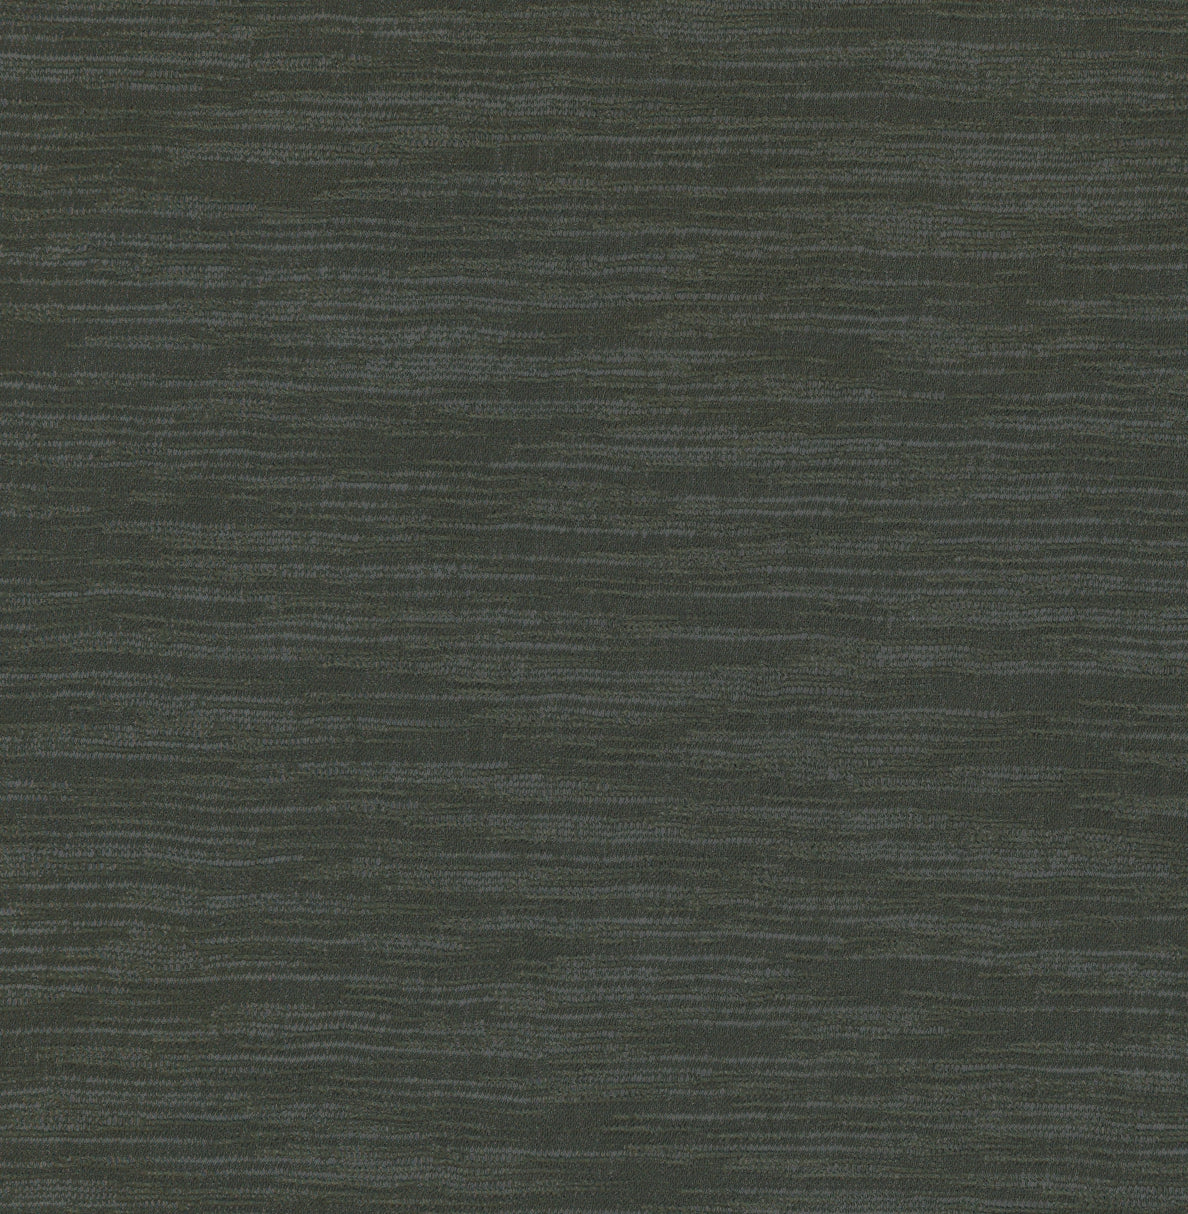 15011-10 Olive Green Polyester Plain Dyed 100% 58&quot; 95g/yd green knit plain dyed polyester Solid Color - knit fabric - woven fabric - fabric company - fabric wholesale - fabric b2b - fabric factory - high quality fabric - hong kong fabric - fabric hk - acetate fabric - cotton fabric - linen fabric - metallic fabric - nylon fabric - polyester fabric - spandex fabric - chun wing hing - cwh hk - fabric worldwide ship - 針織布 - 梳織布 - 布料公司- 布料批發 - 香港布料 - 秦榮興